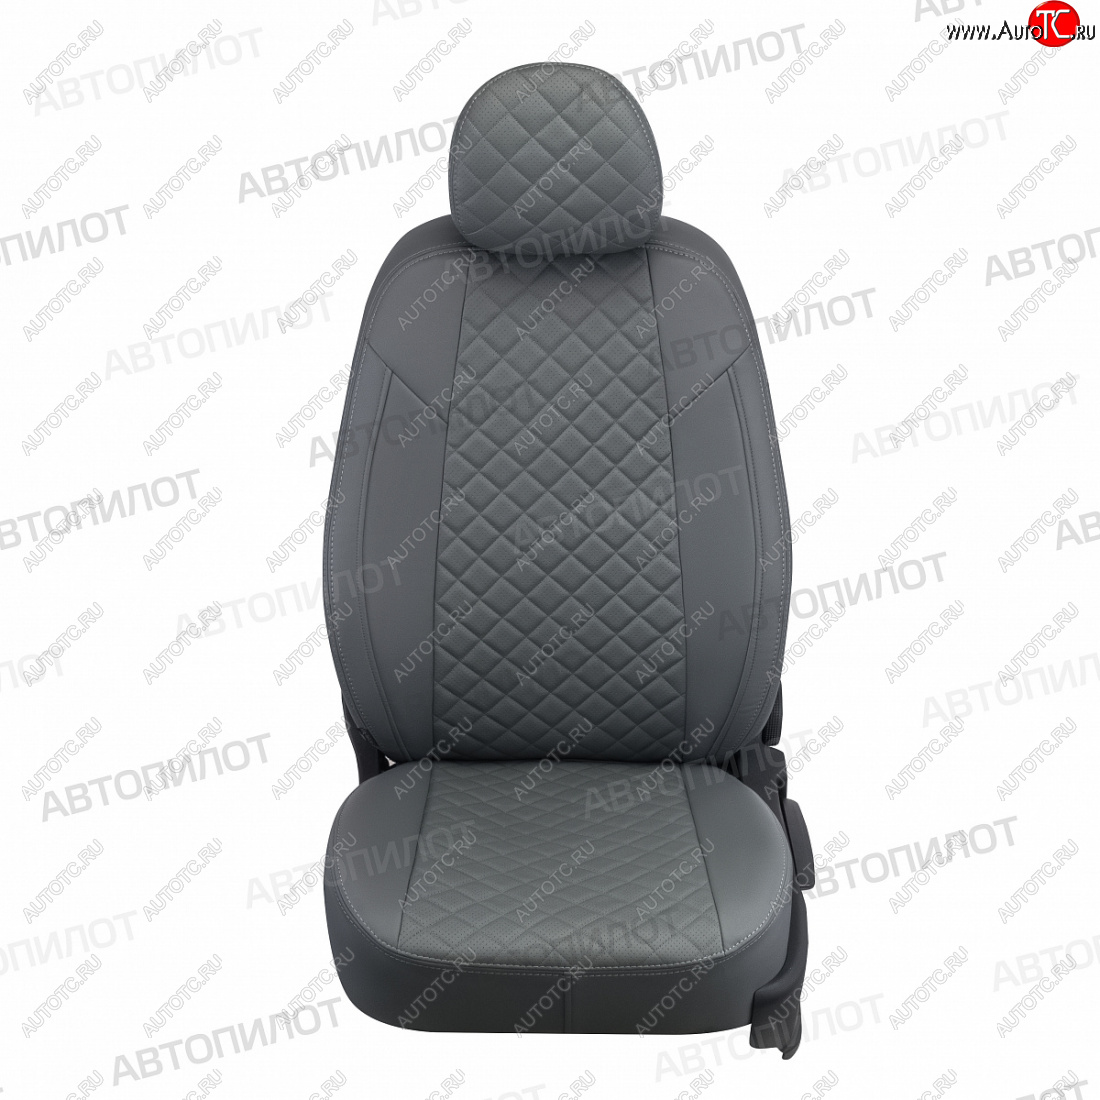 13 999 р. Чехлы сидений (экокожа) Автопилот Ромб  Honda CR-V  RD4,RD5,RD6,RD7,RD9  (2001-2006) (серый)